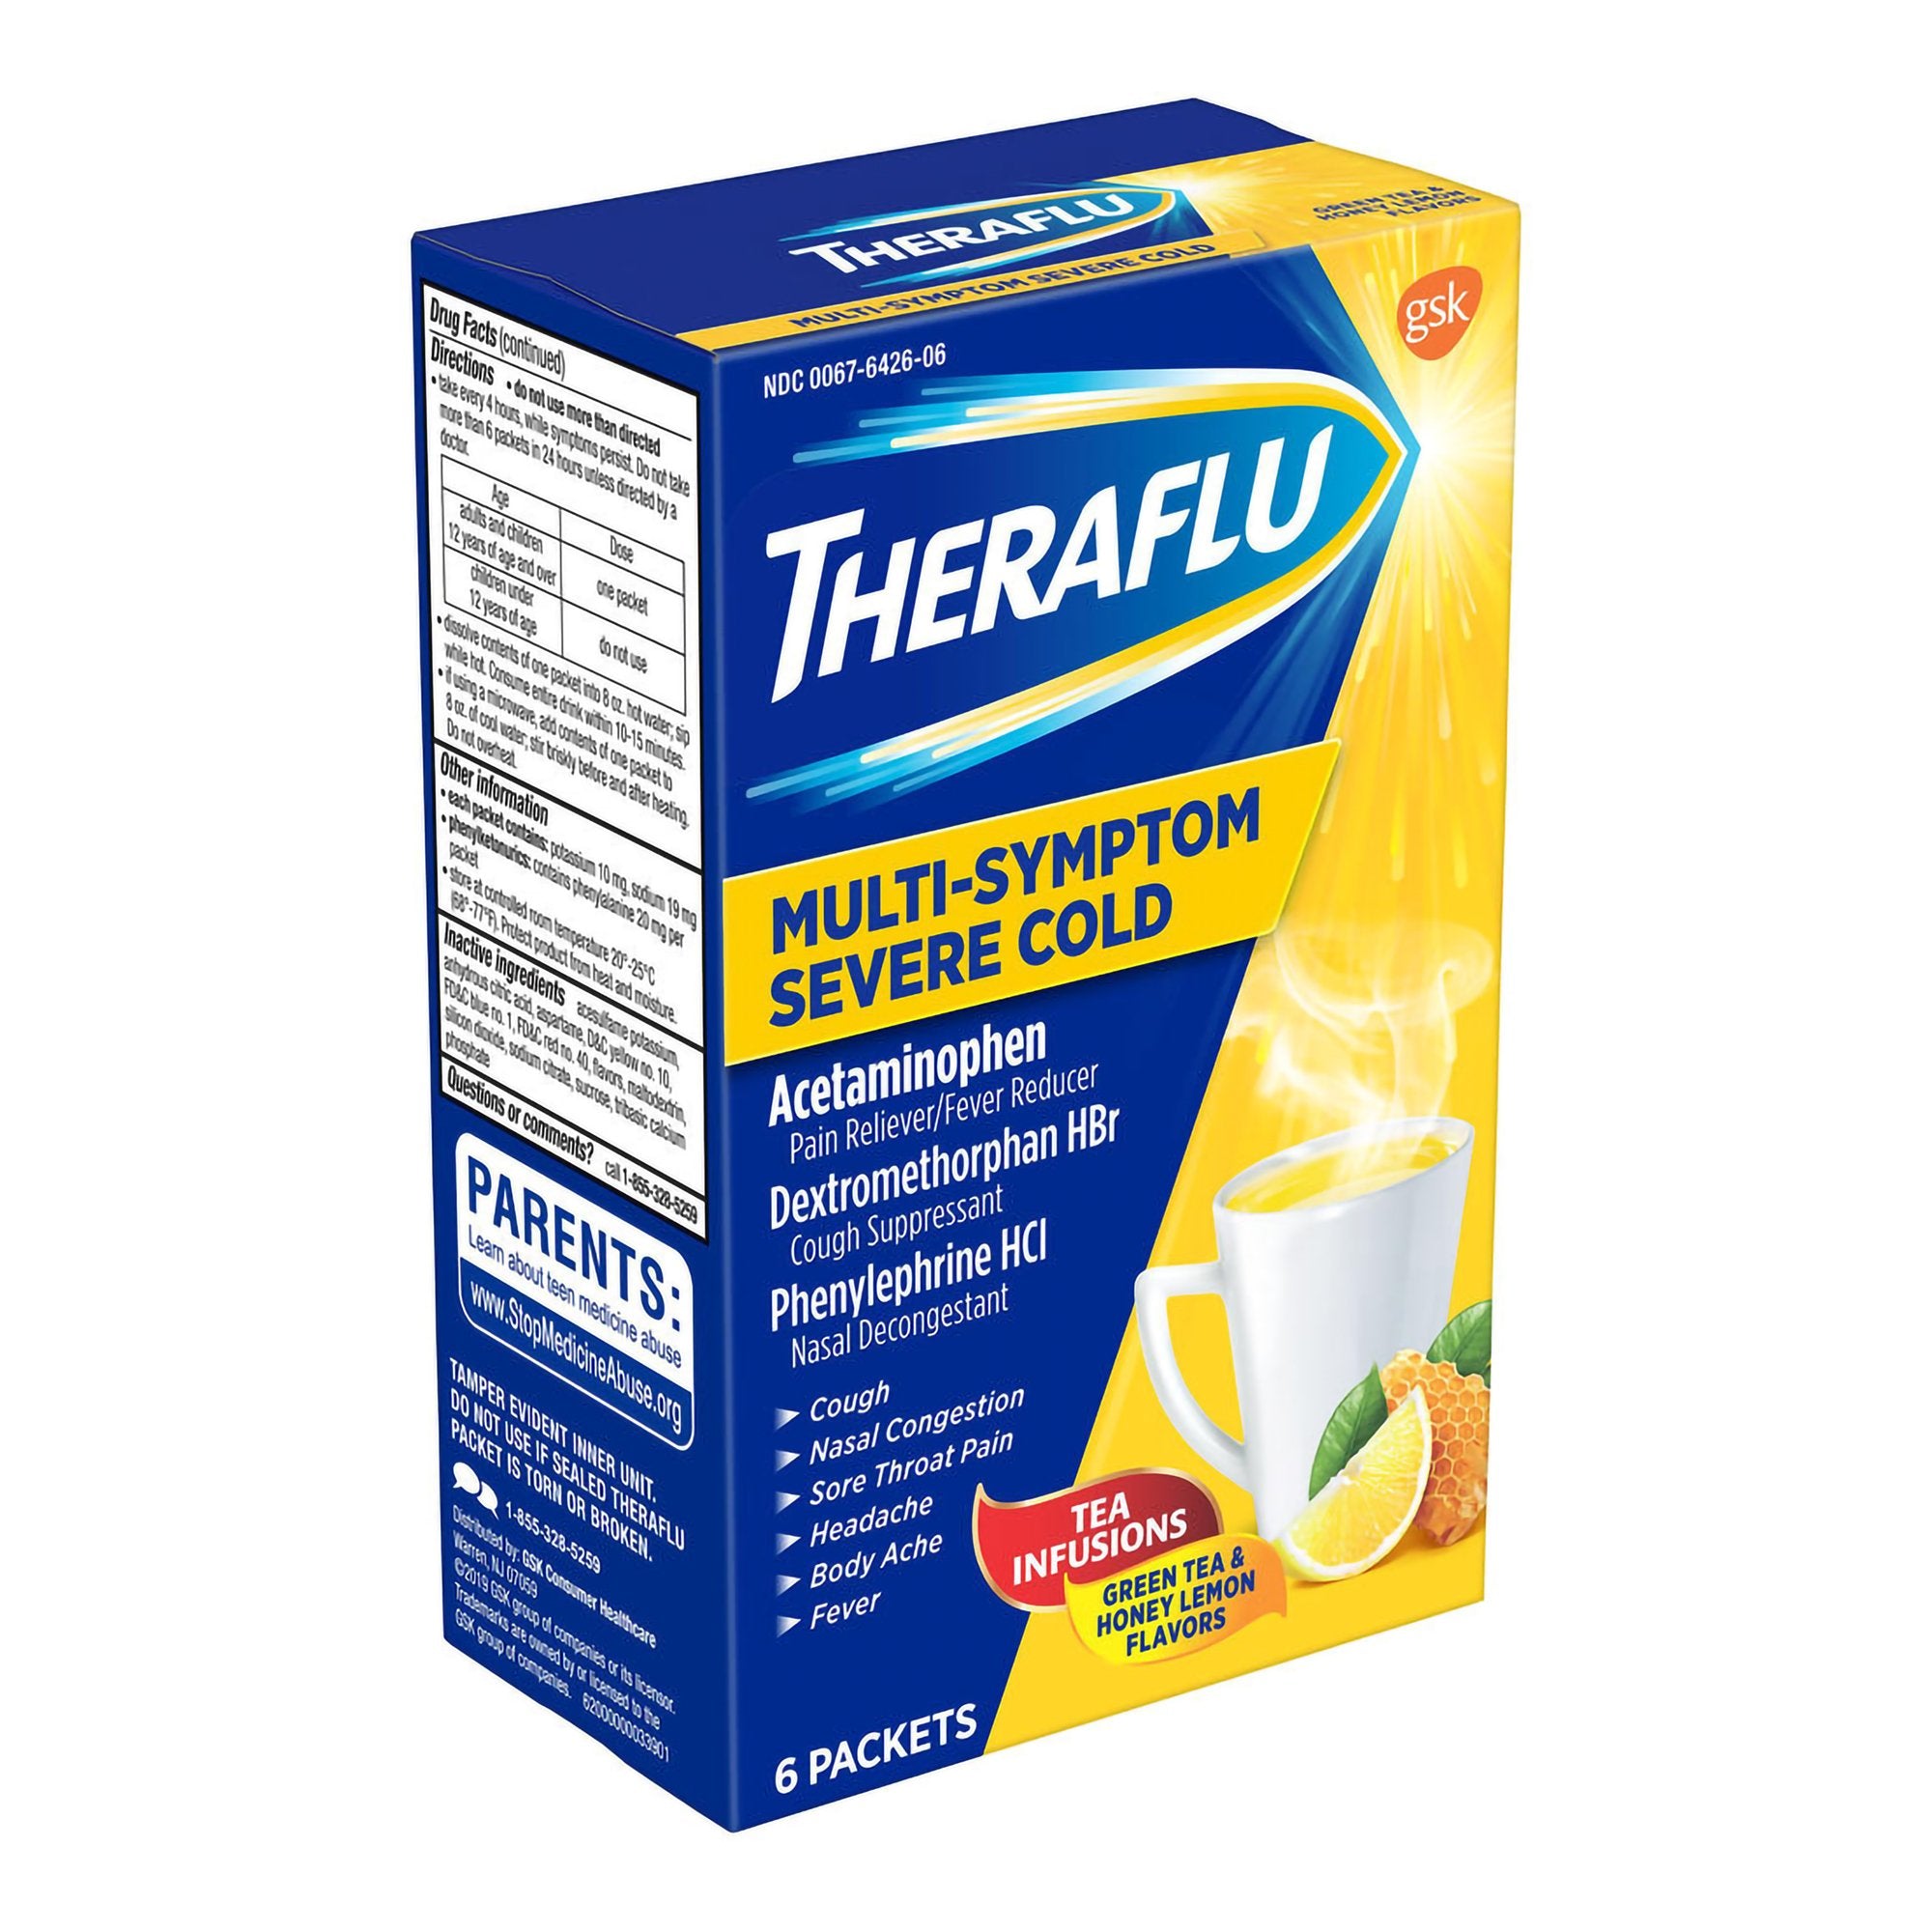 Cold and Cough Relief Theraflu Multi-Symptom Severe Cold 500 mg - 20 mg - 10 mg Strength Powder 6 per Box